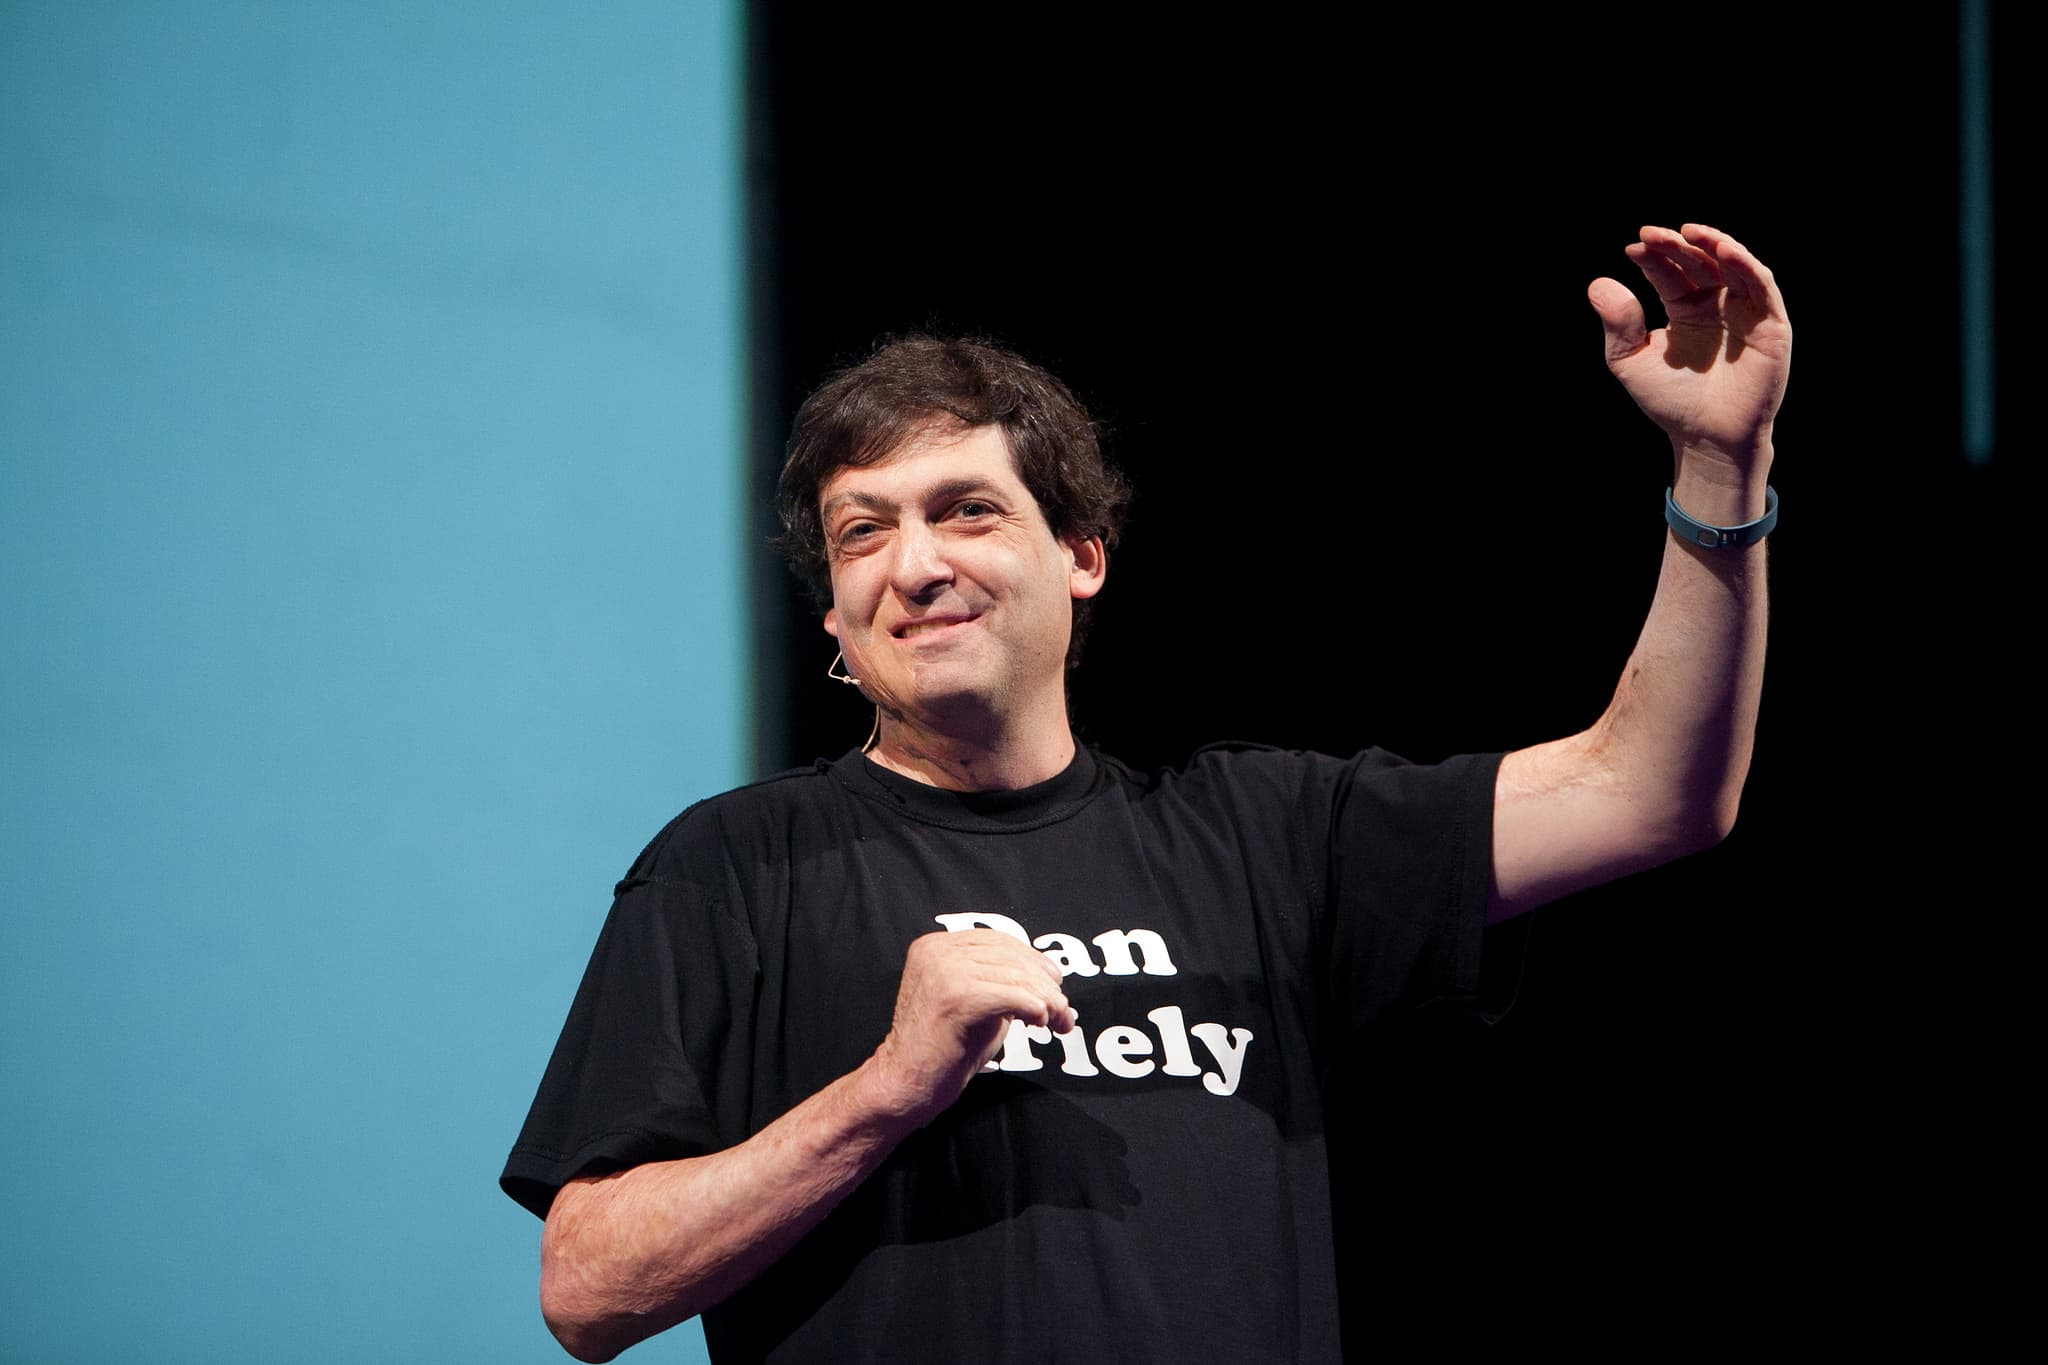 Duke expert Dan Ariely shares his top financial tips